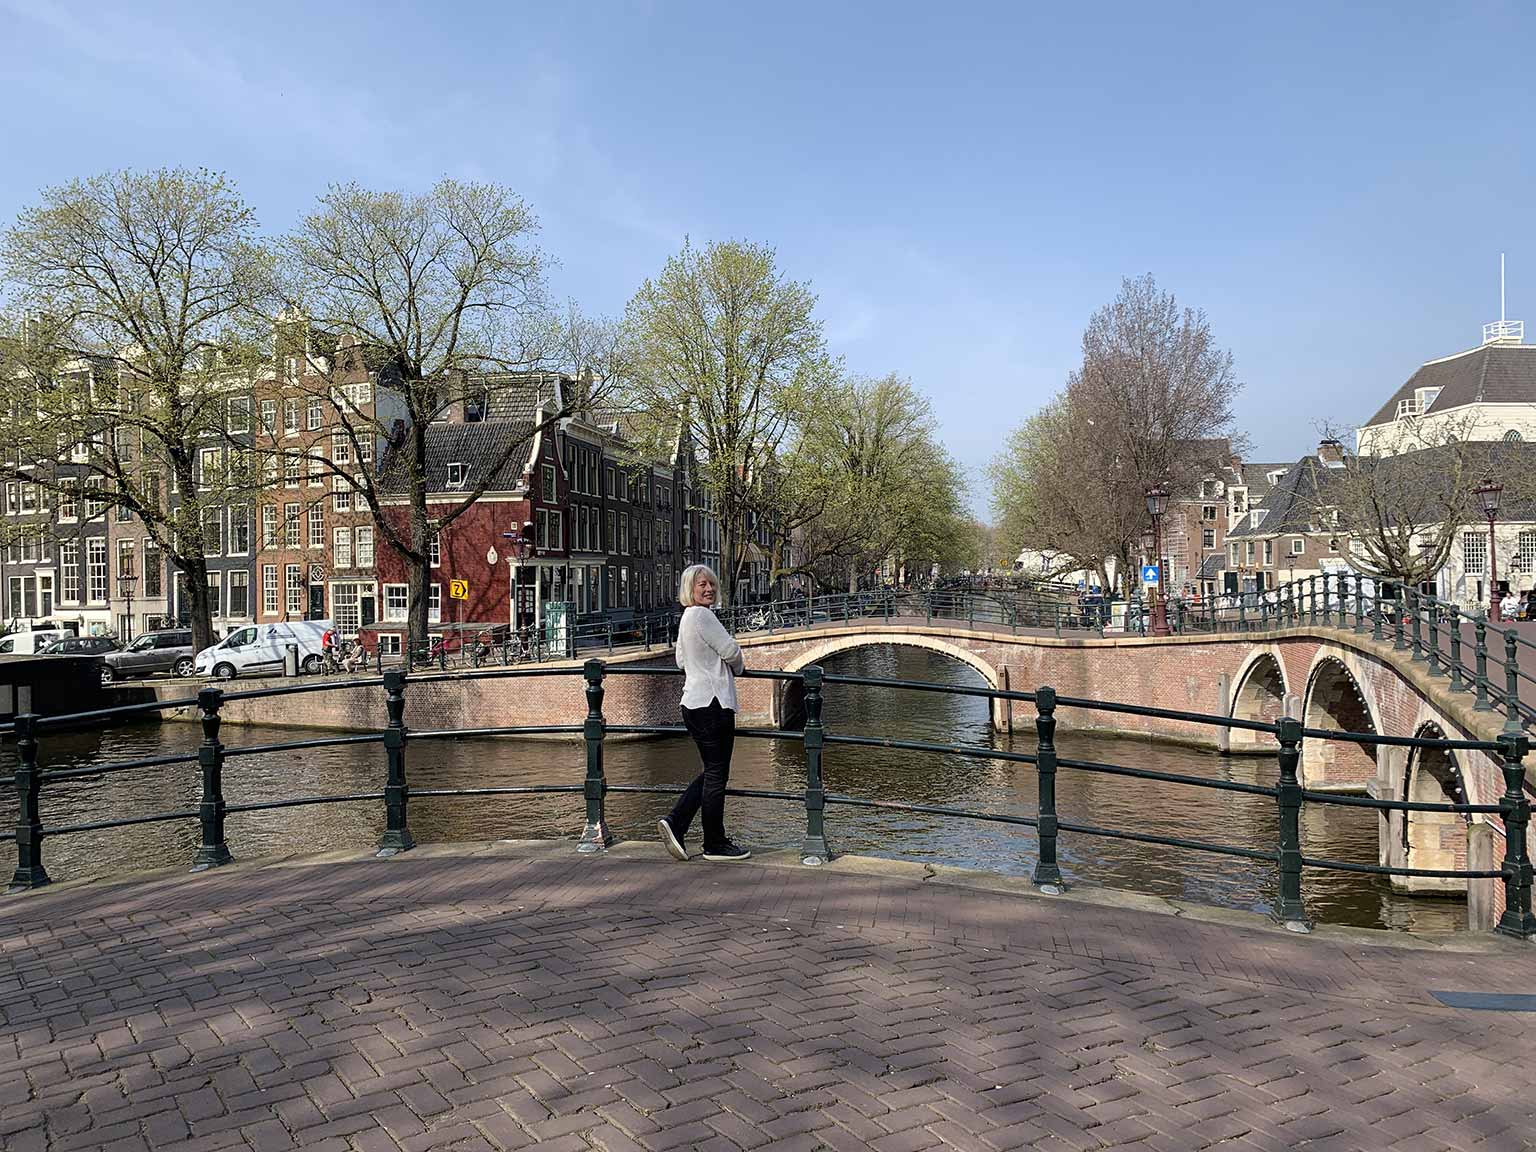 Me on Prinsengracht, Amsterdam, with Reguliersgracht and Amstelkerk